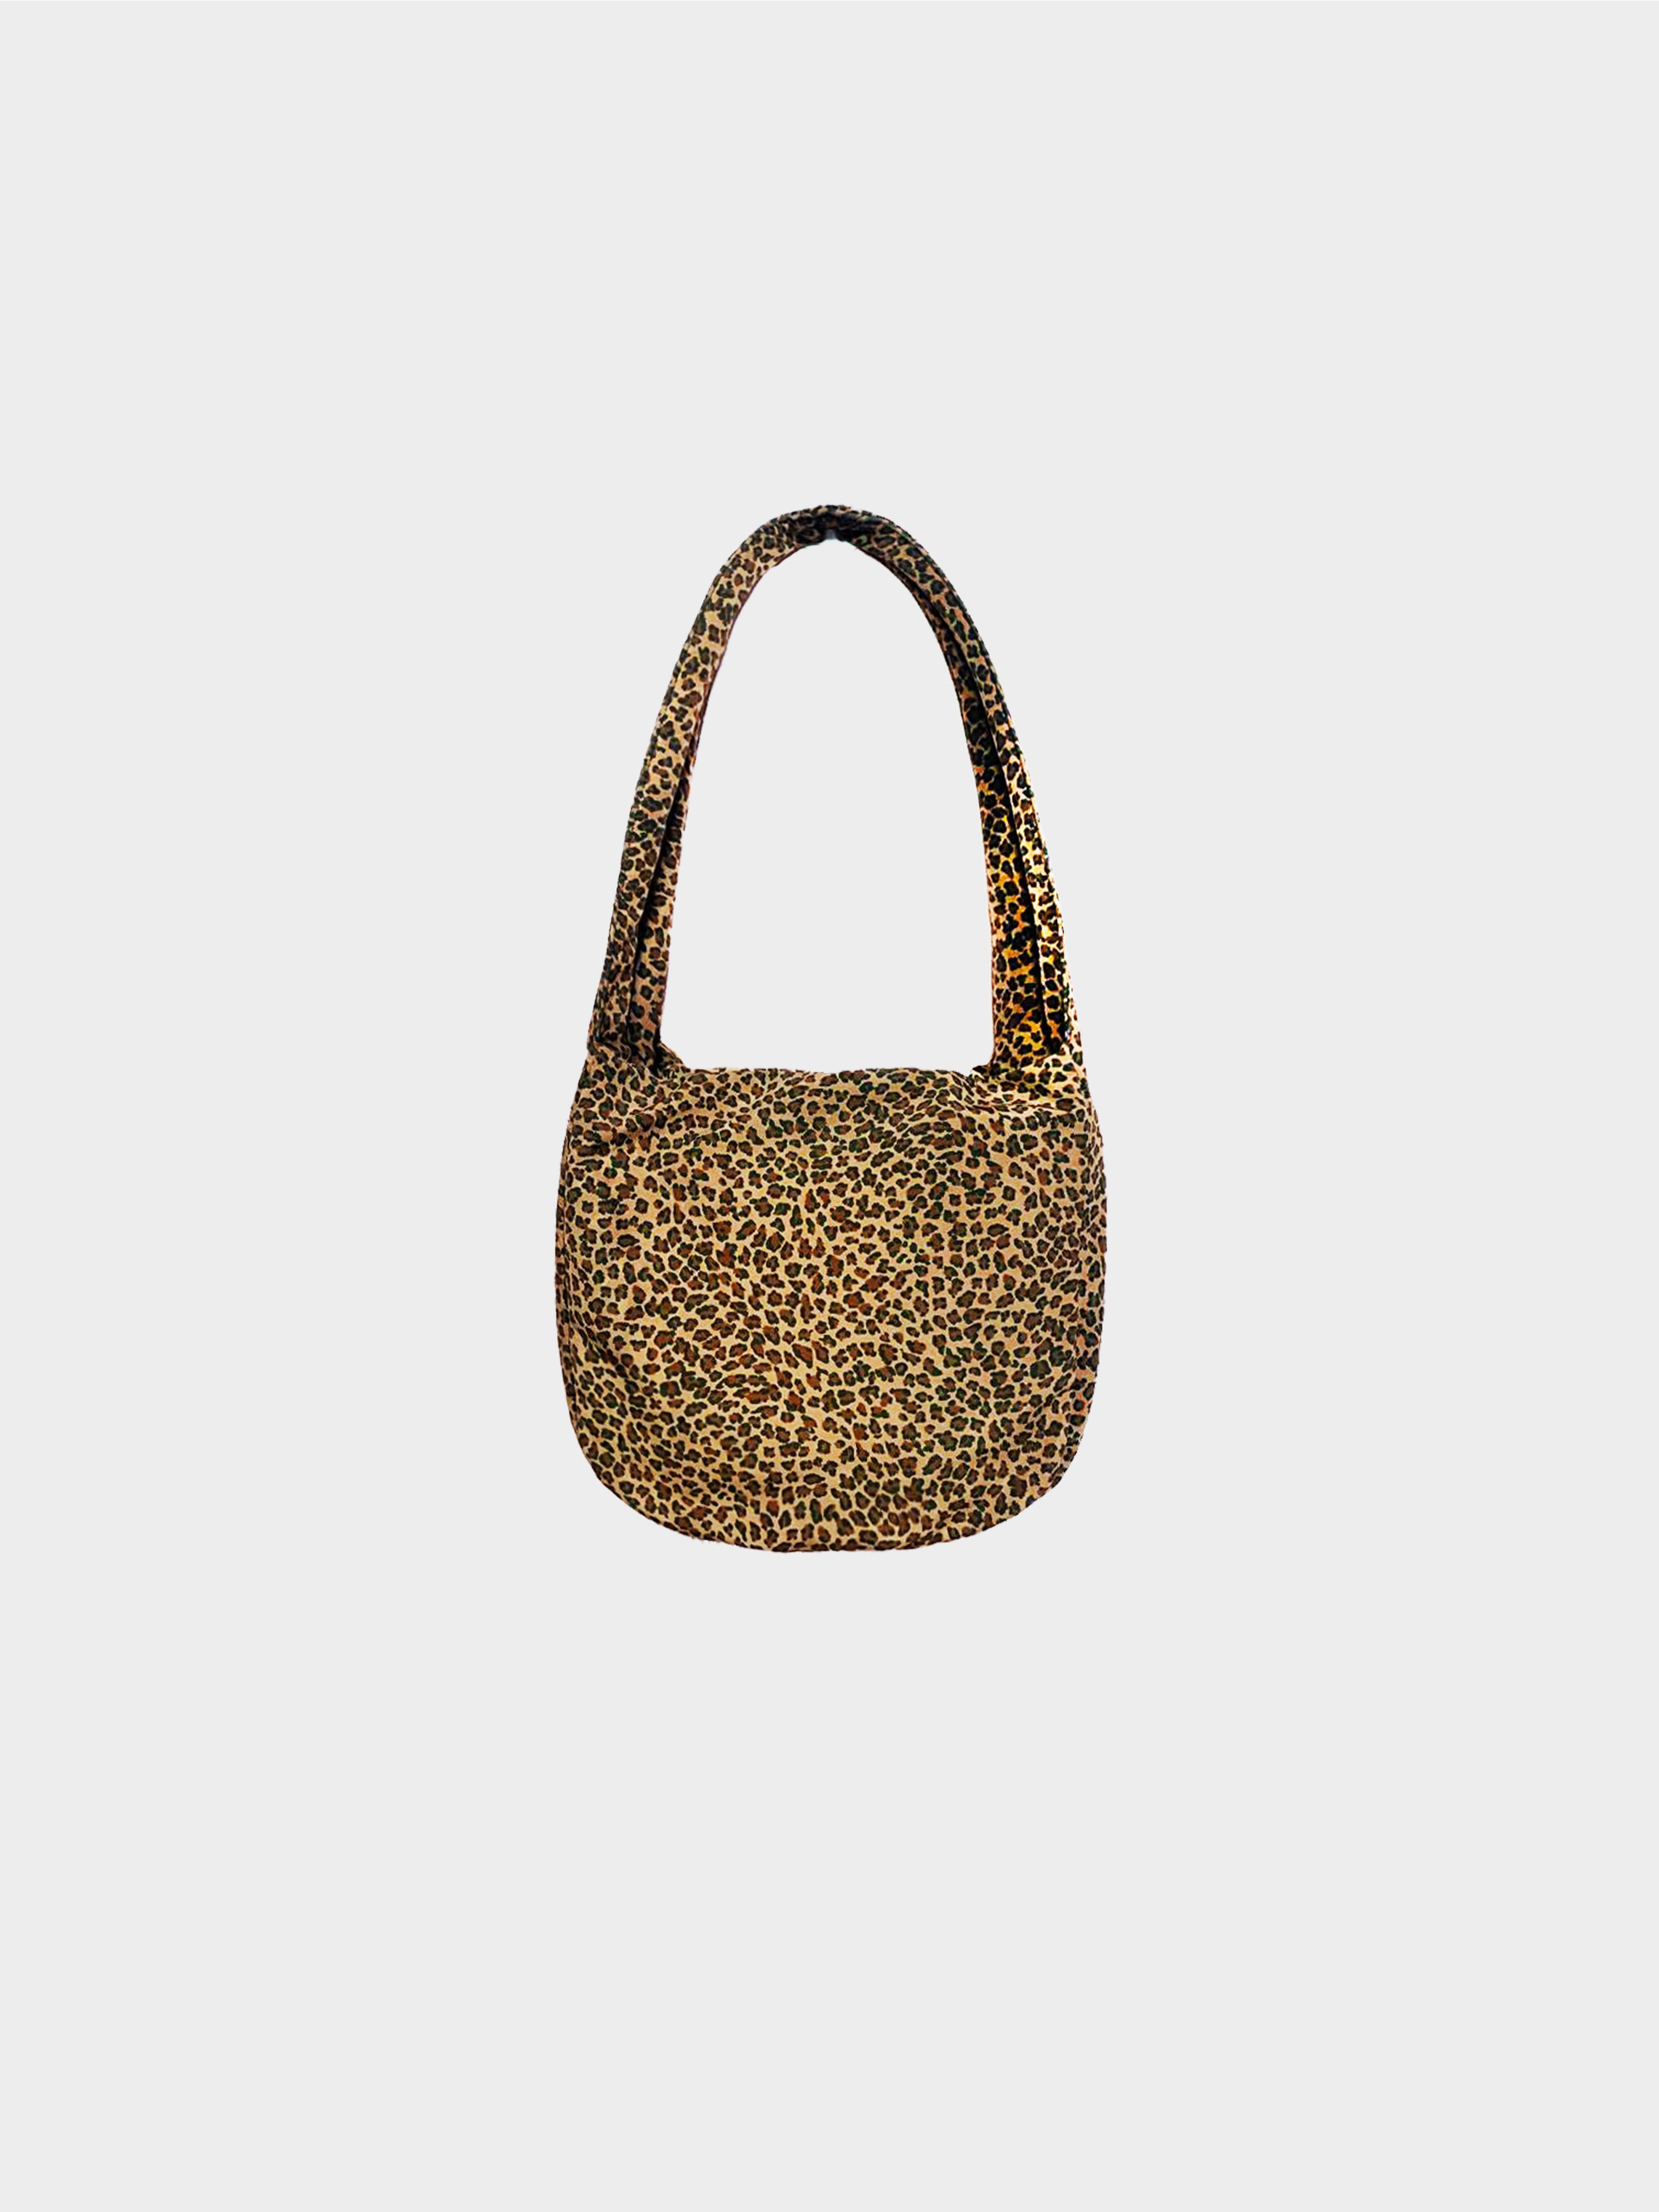 Bottega Veneta 2000s Nylon Leopard Print Hobo Bag